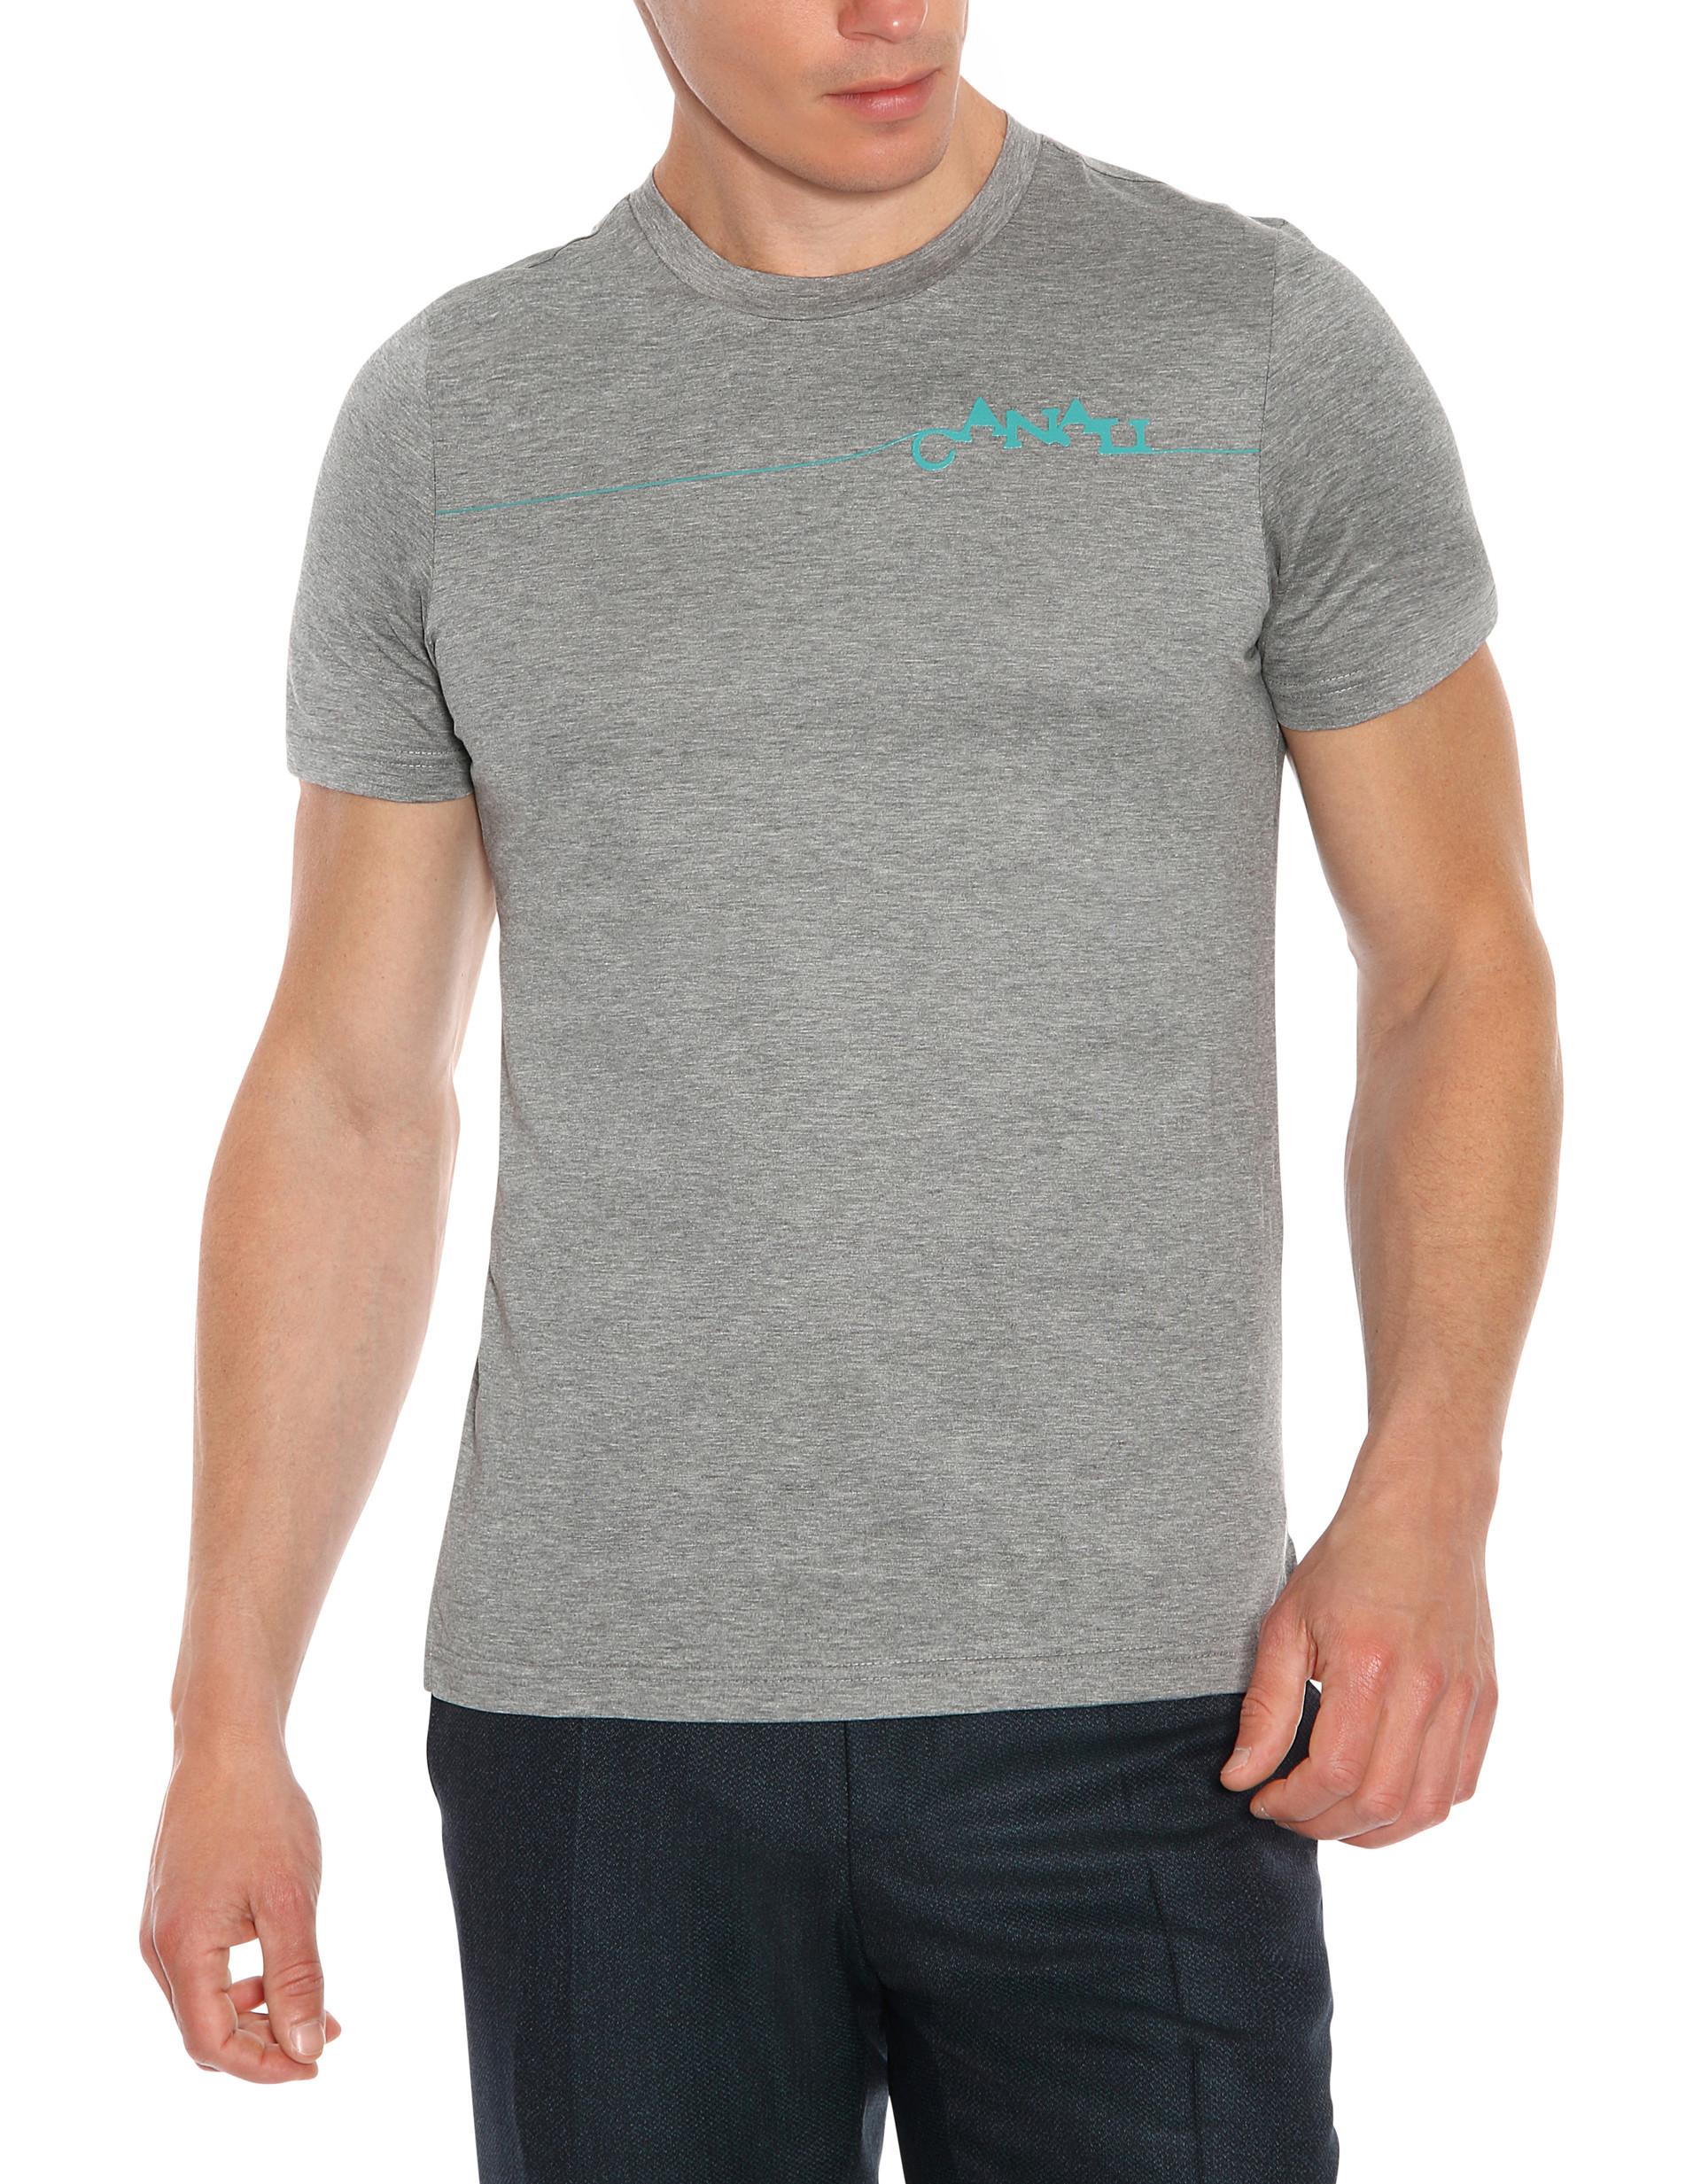 Canali Cotton Light Gray Jersey T-shirt for Men - Lyst